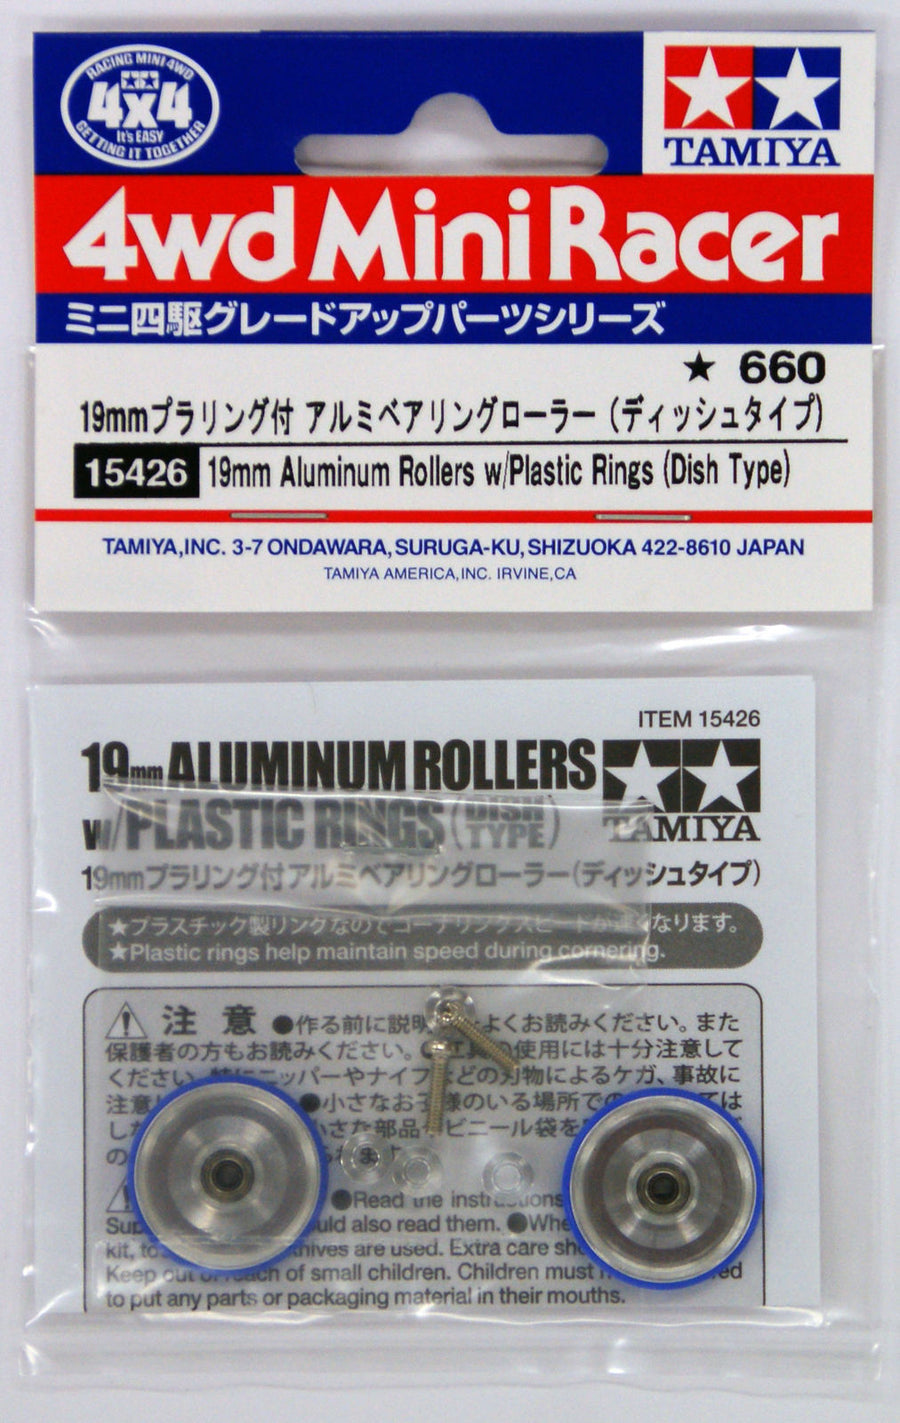 19mm Aluminum Rollers w/Plastic Rings (Dish Type)